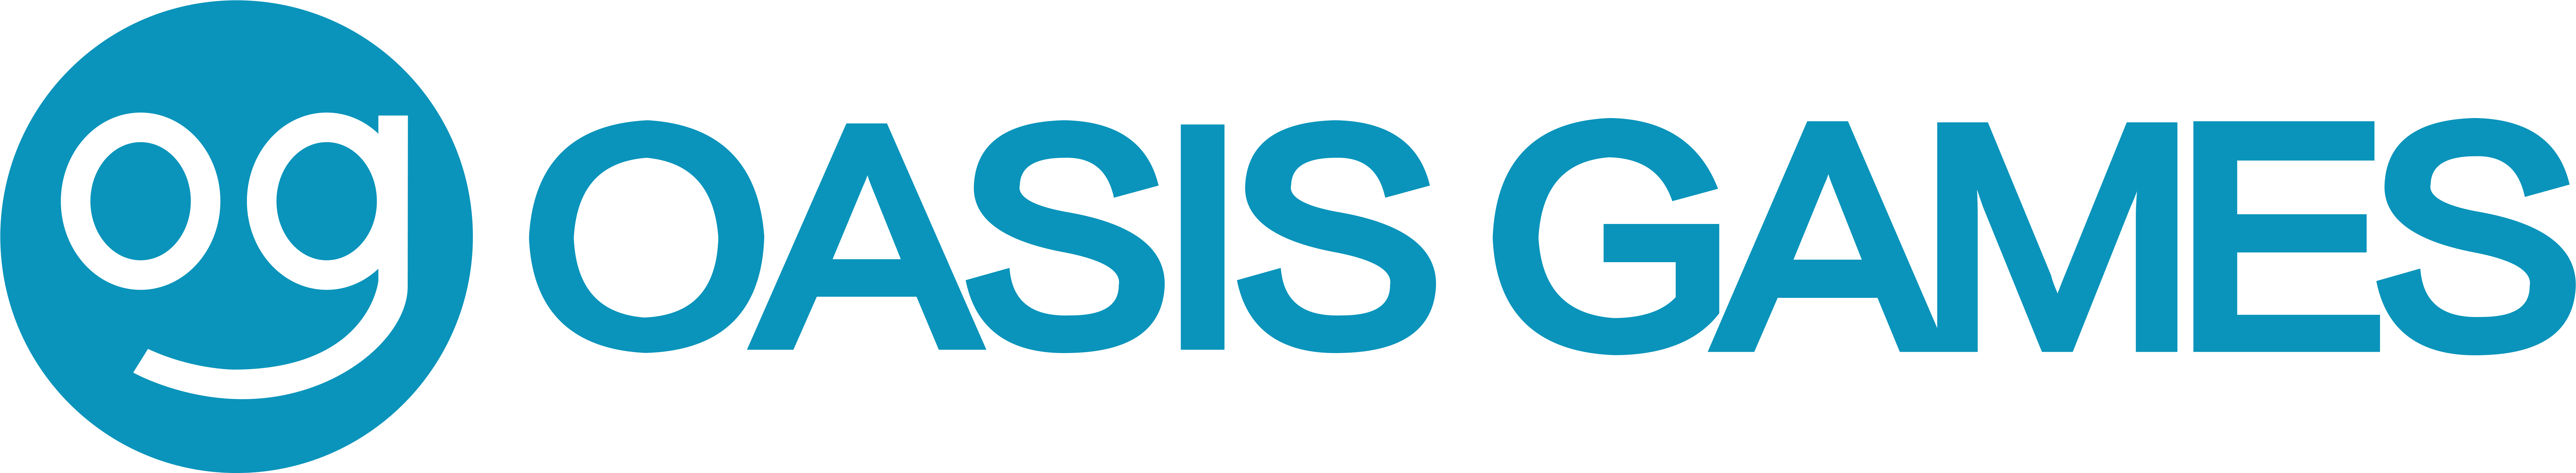 Oasis Games Logo Blue Background PNG